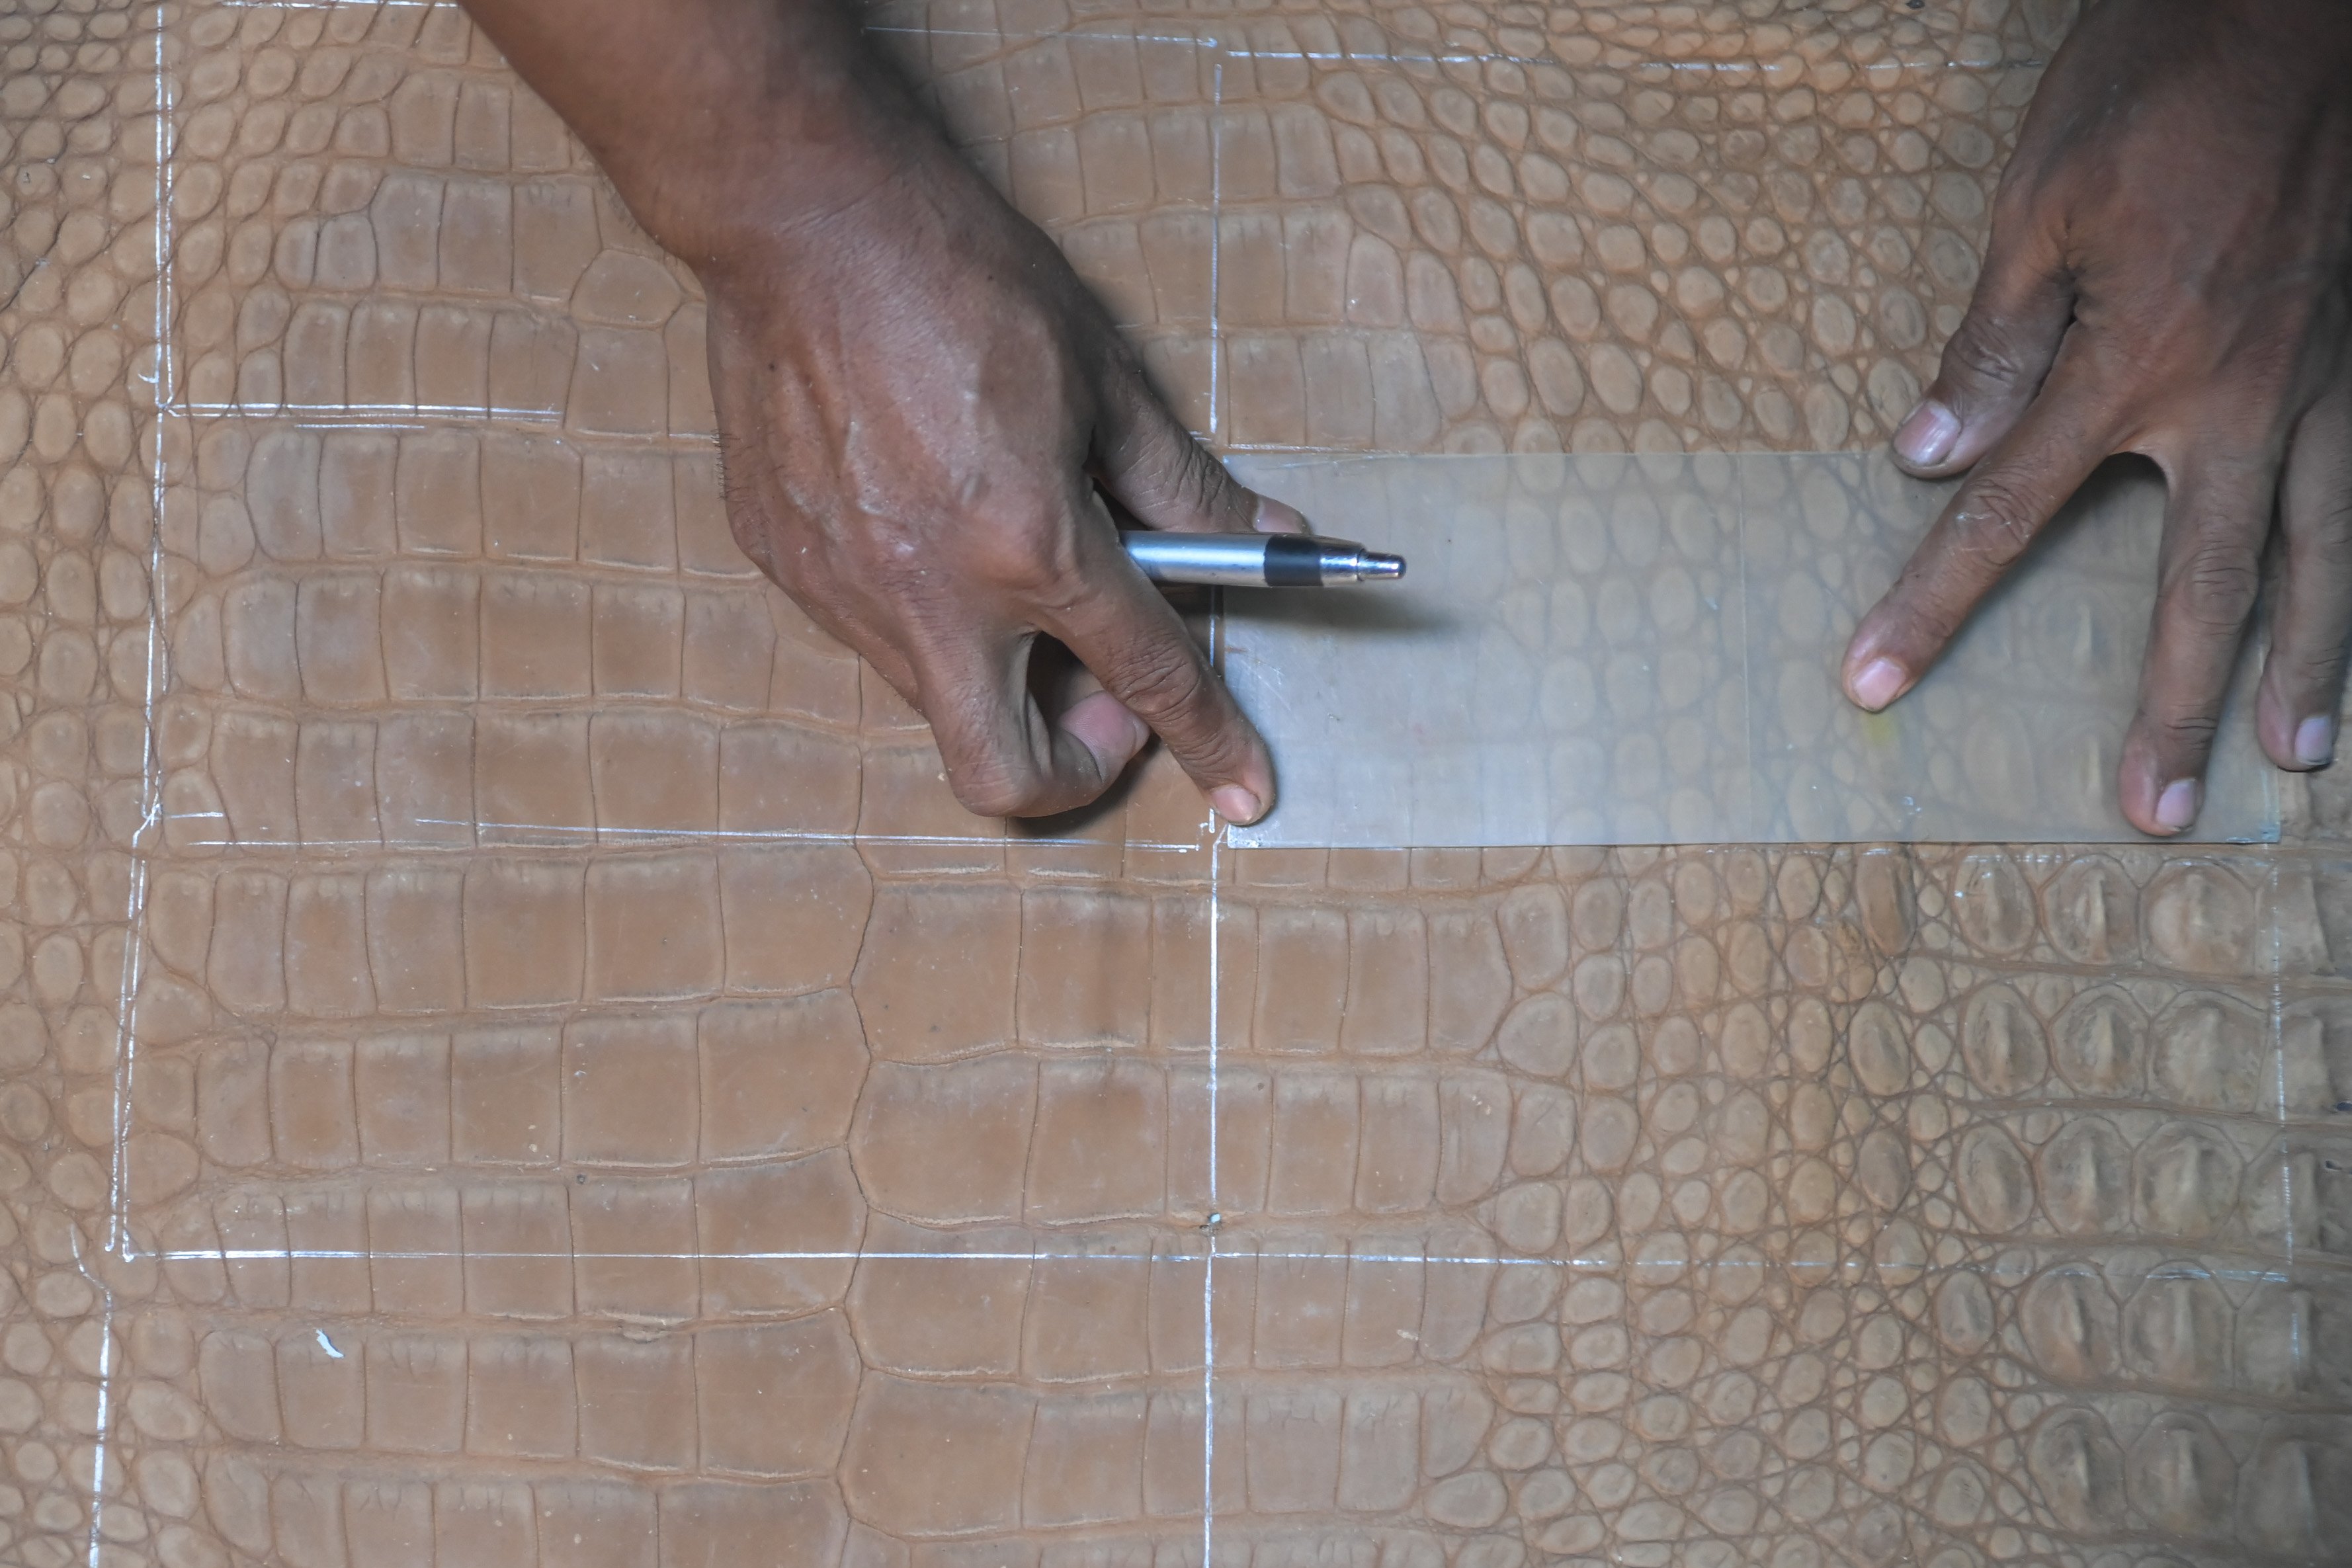 Pengrajin membuat pola pada kulit buaya saat proses pembuatan kerajinan tangan berbahan dasar kulit buaya di Merauke, Papua.